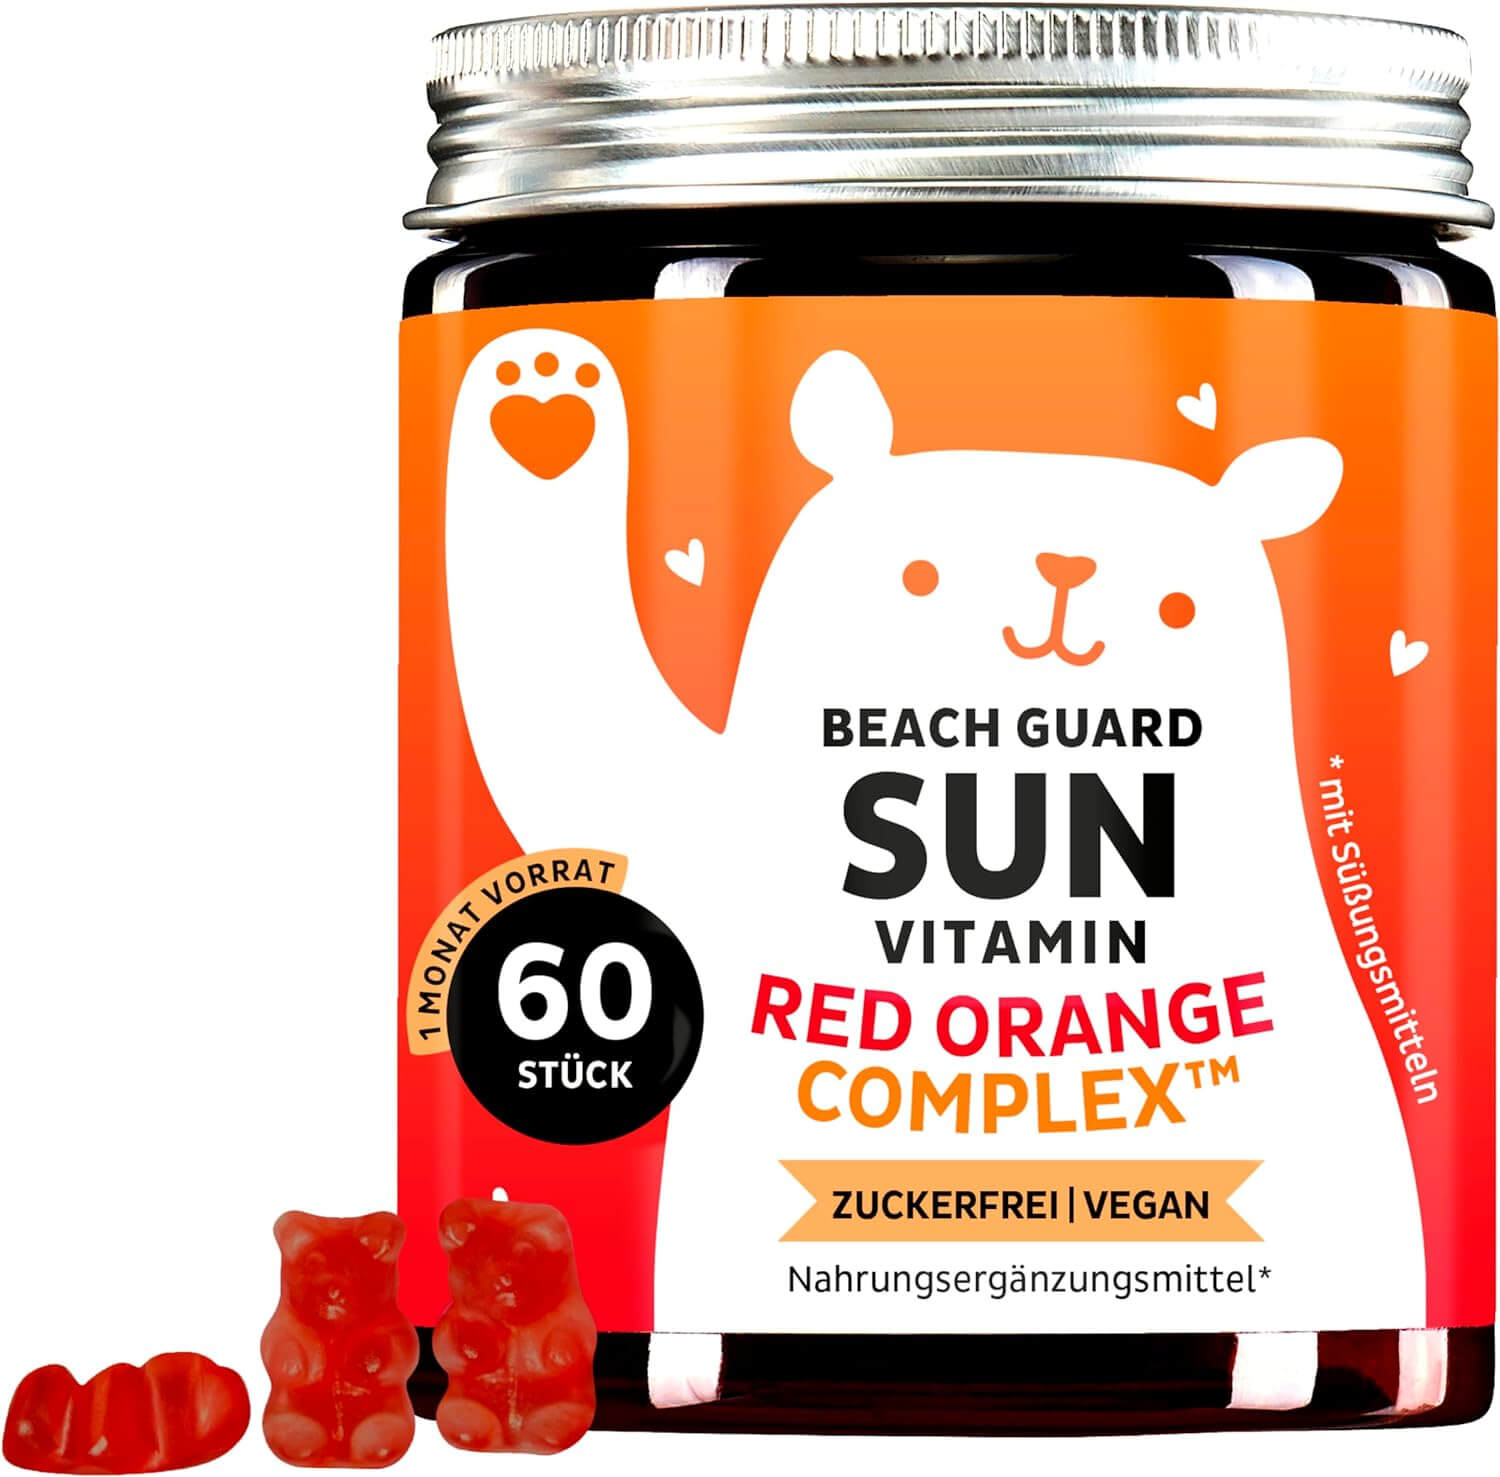 Bears with Benefits Beach Guard Sun | Red Orange Complex | 60 Stück | vegan | zuckerfrei